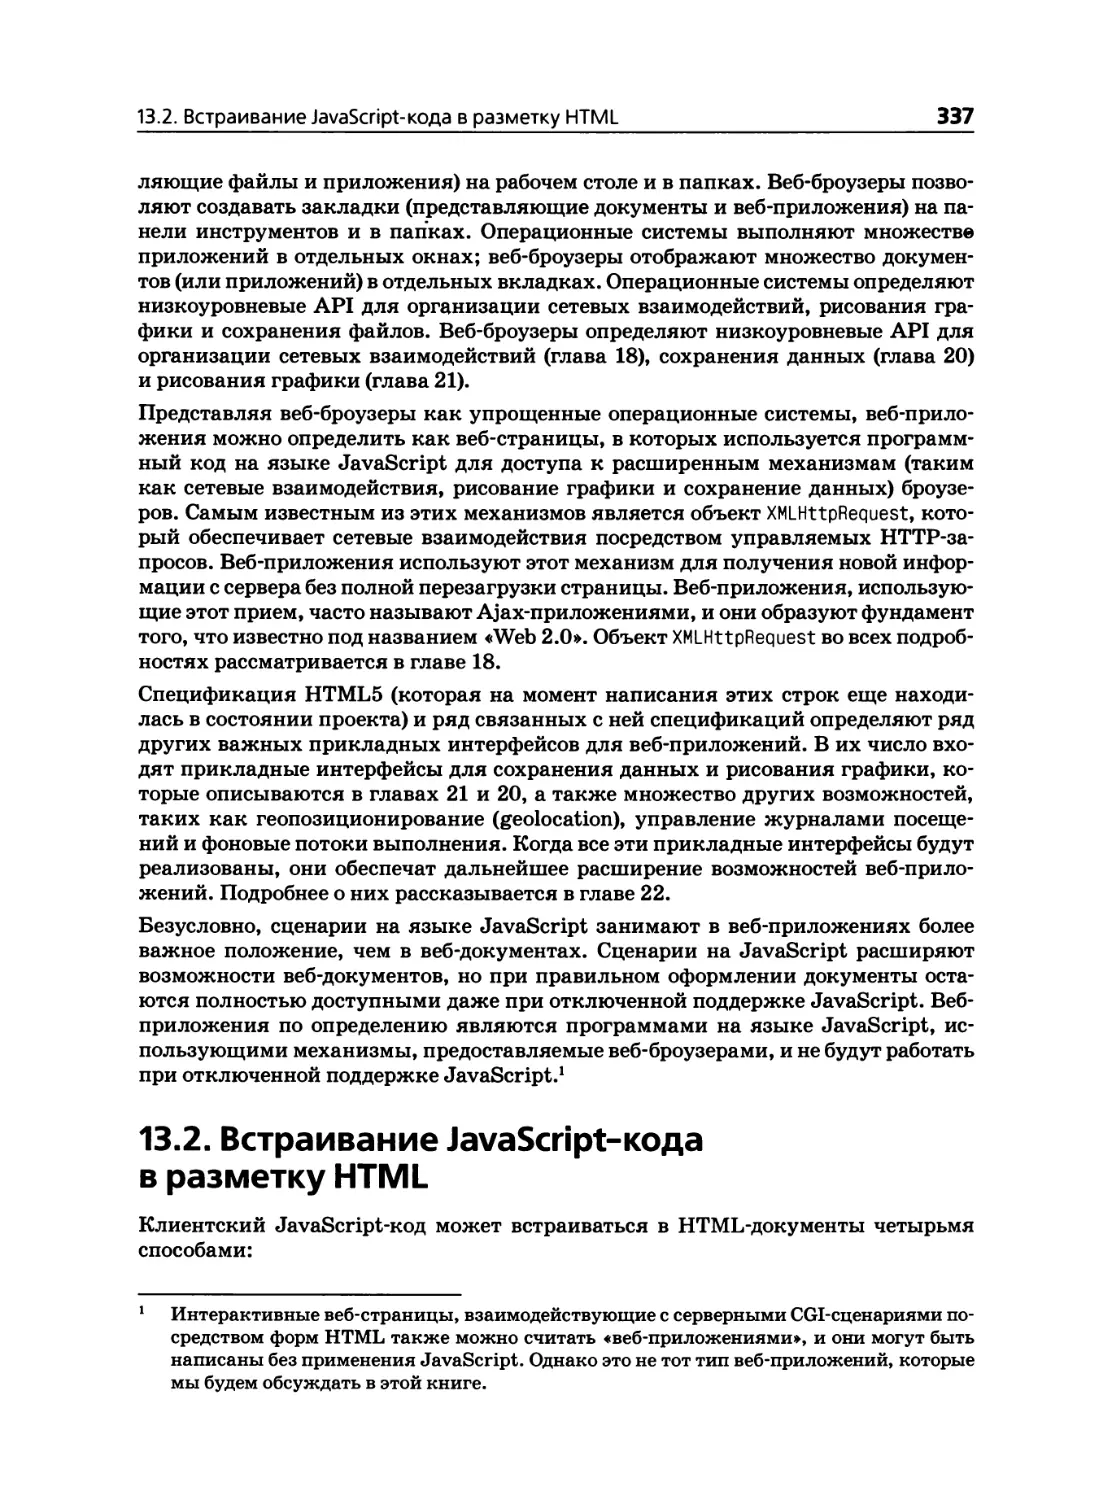 13.2. Встраивание JavaScript-кода в разметку HTML